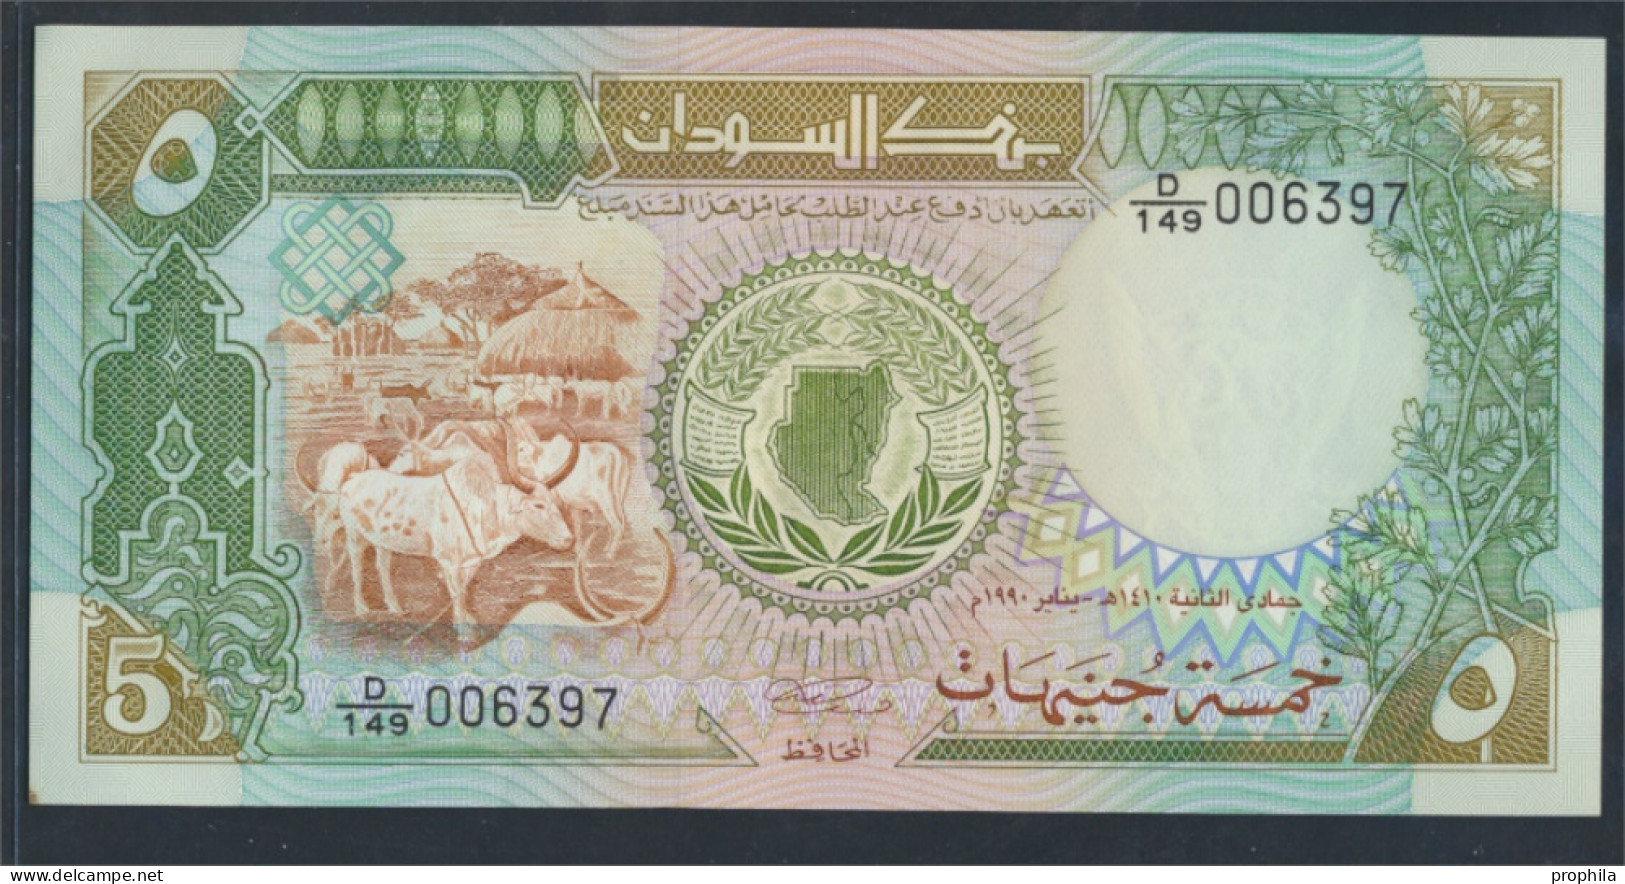 Sudan Pick-Nr: 40c Bankfrisch 1990 5 Pounds (9855658 - Sudan